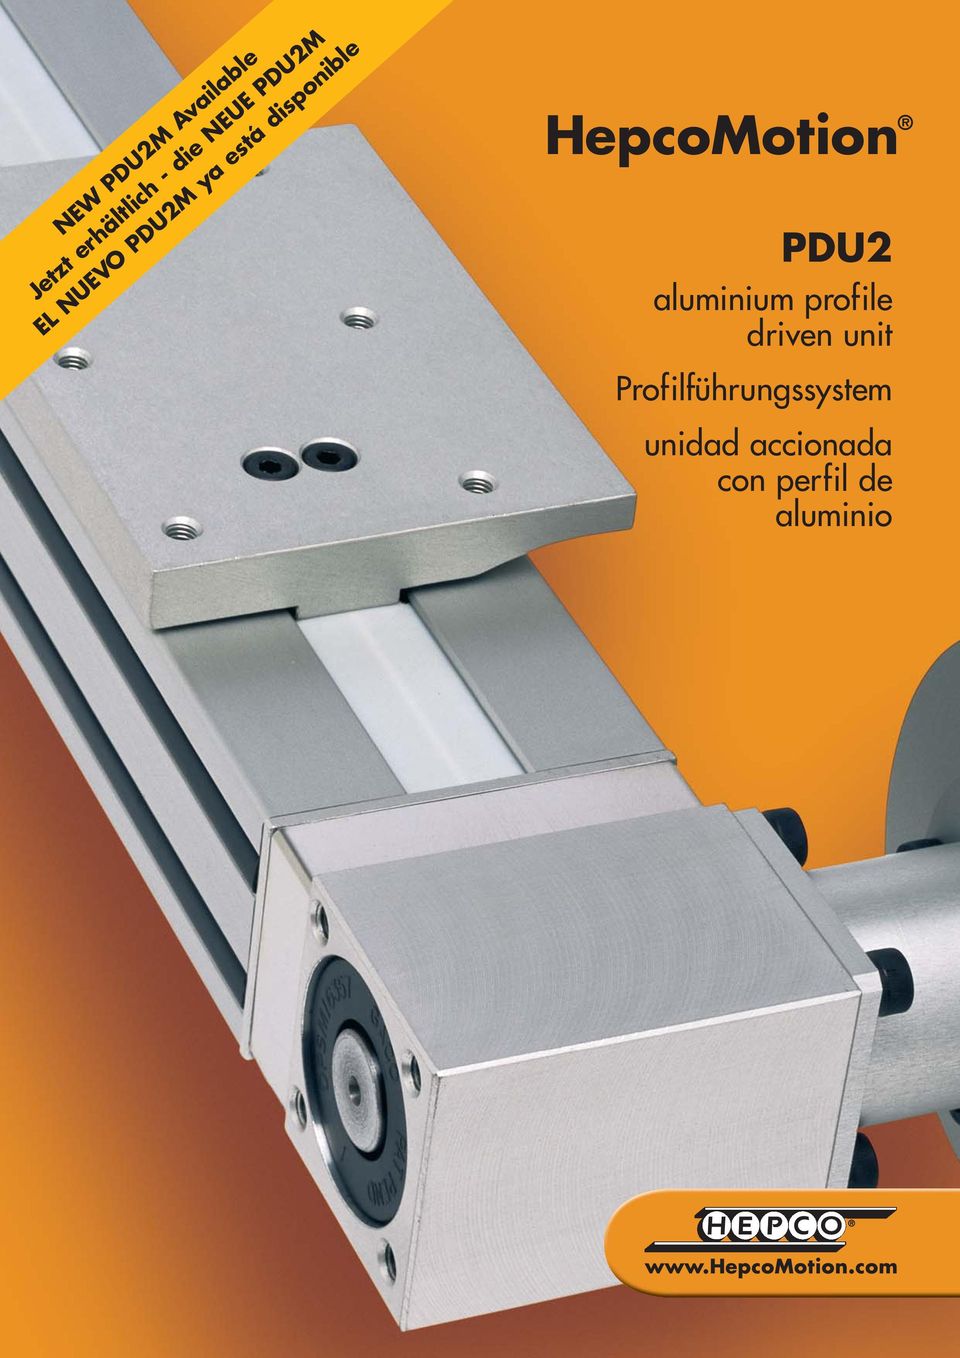 HepcoMotion PDU2 aluminium profile driven unit